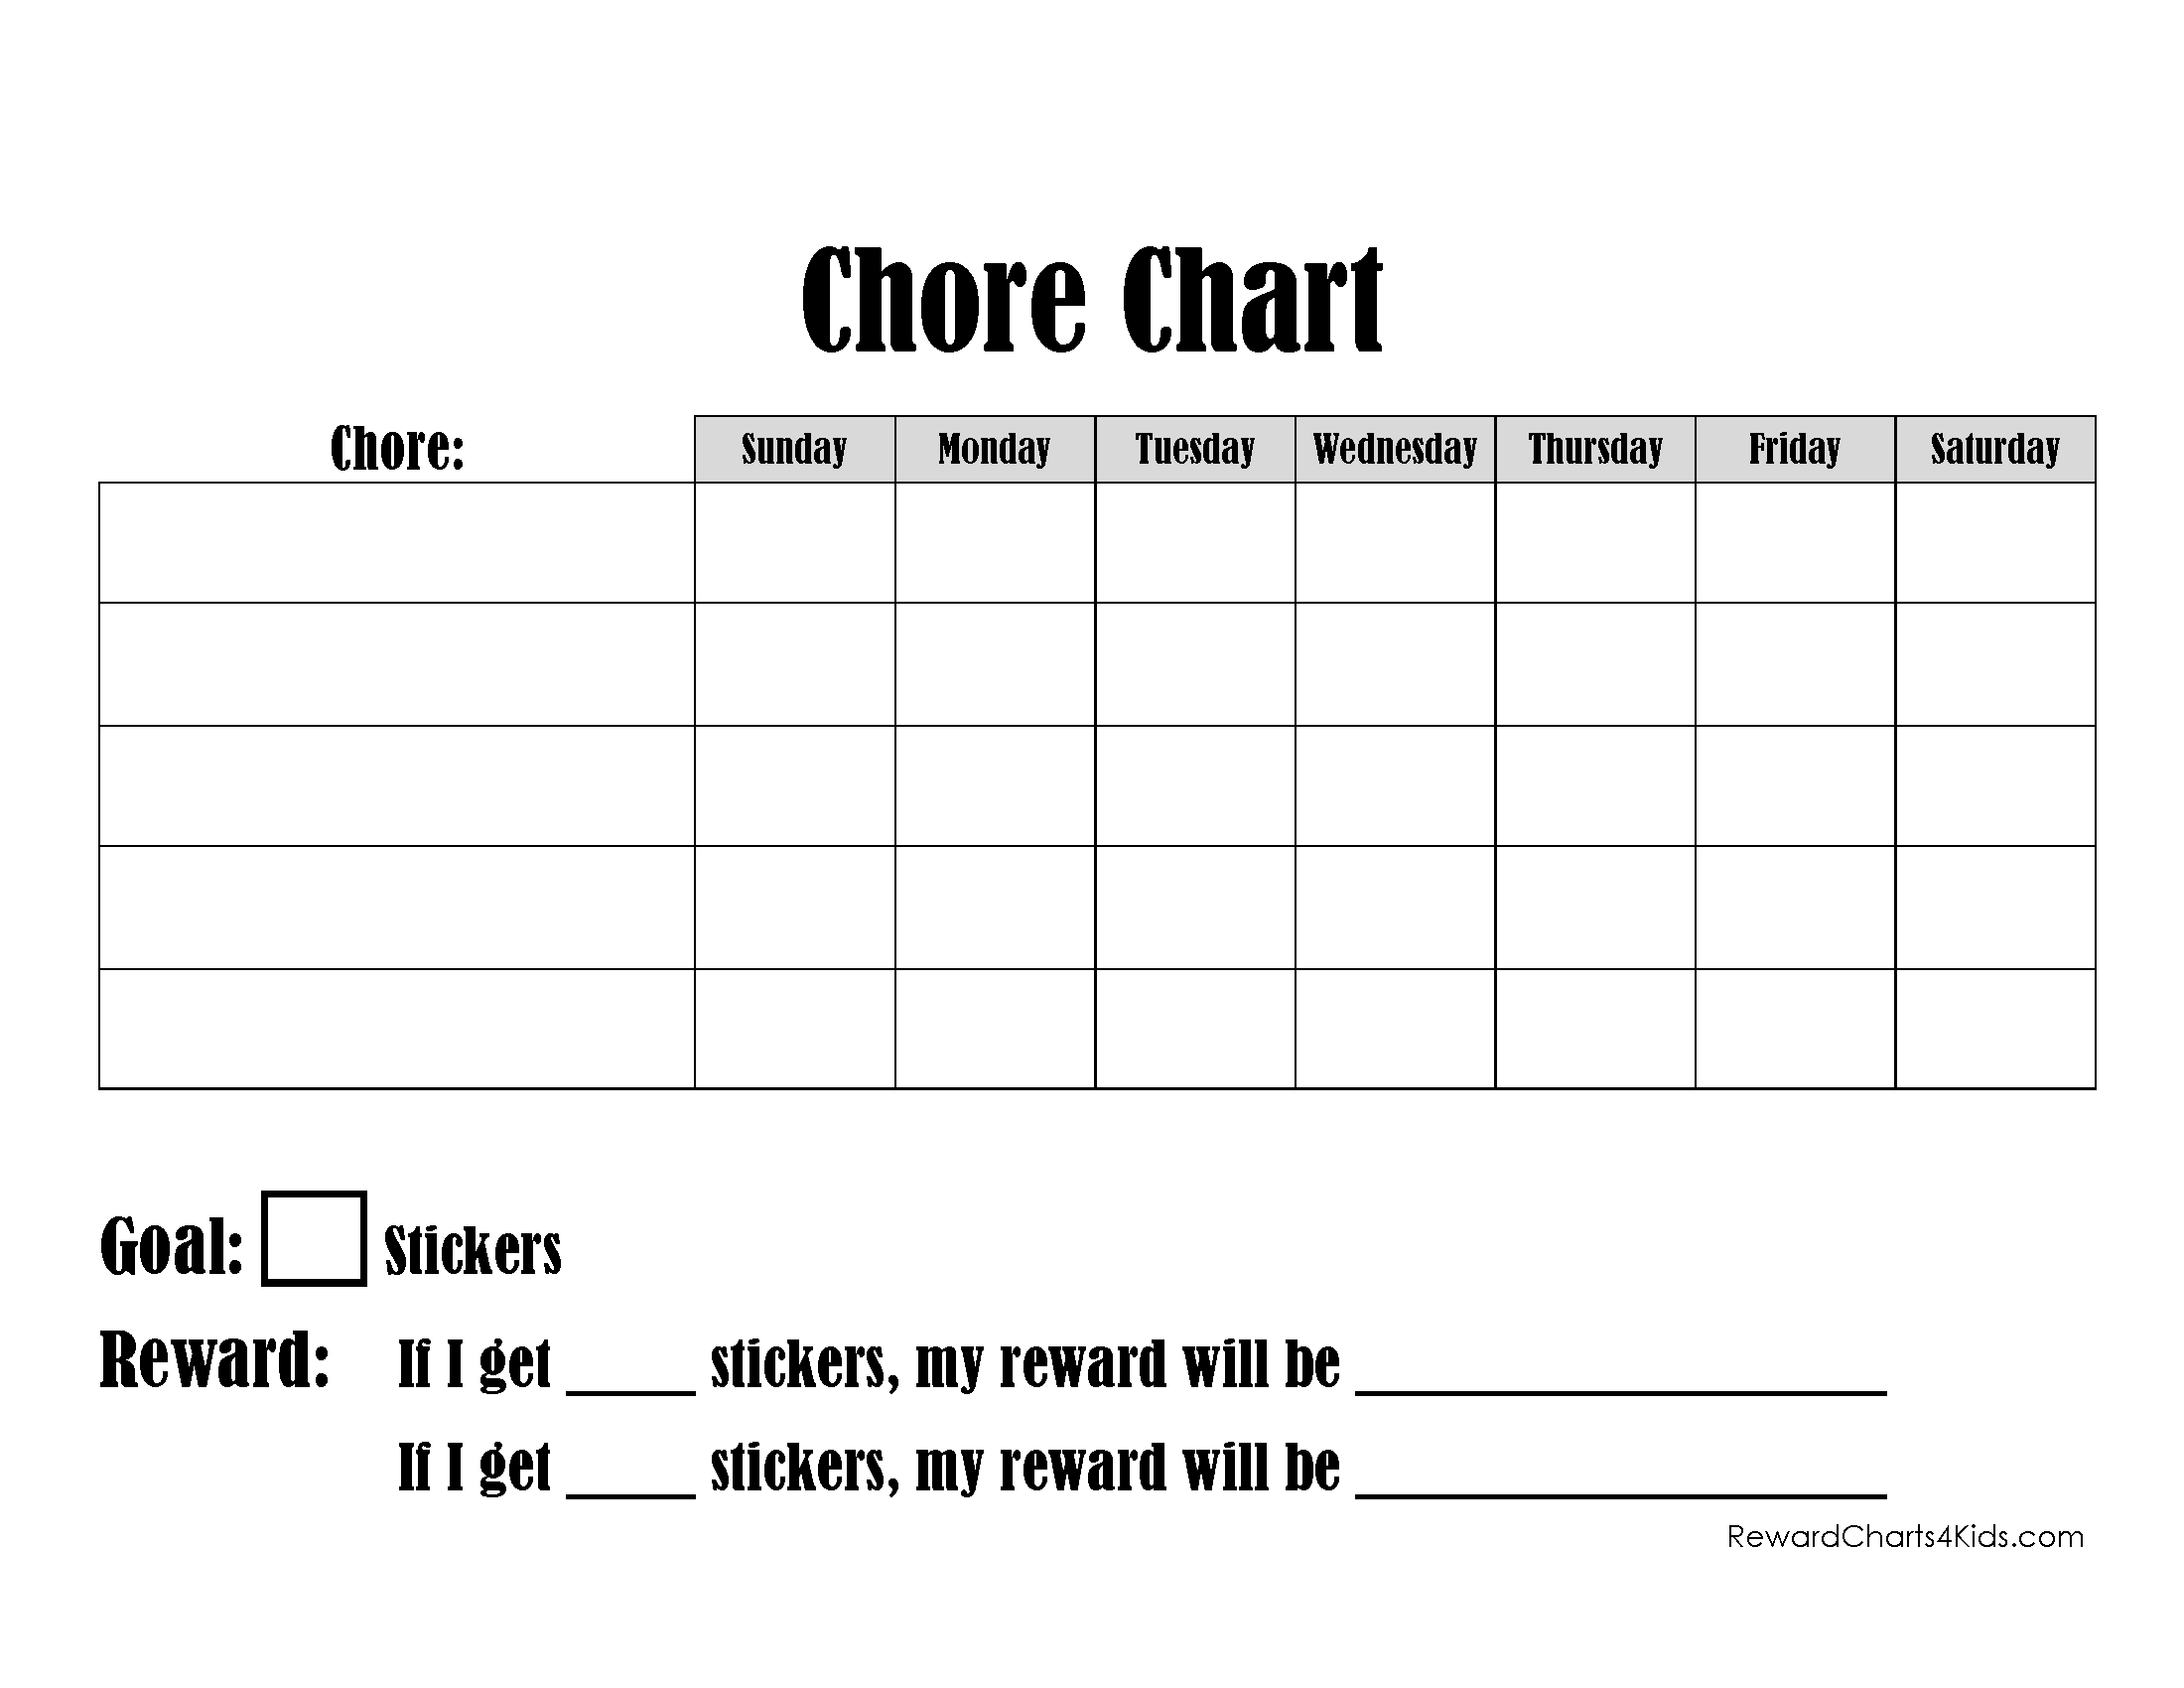 Child Chore List Template from www.rewardcharts4kids.com